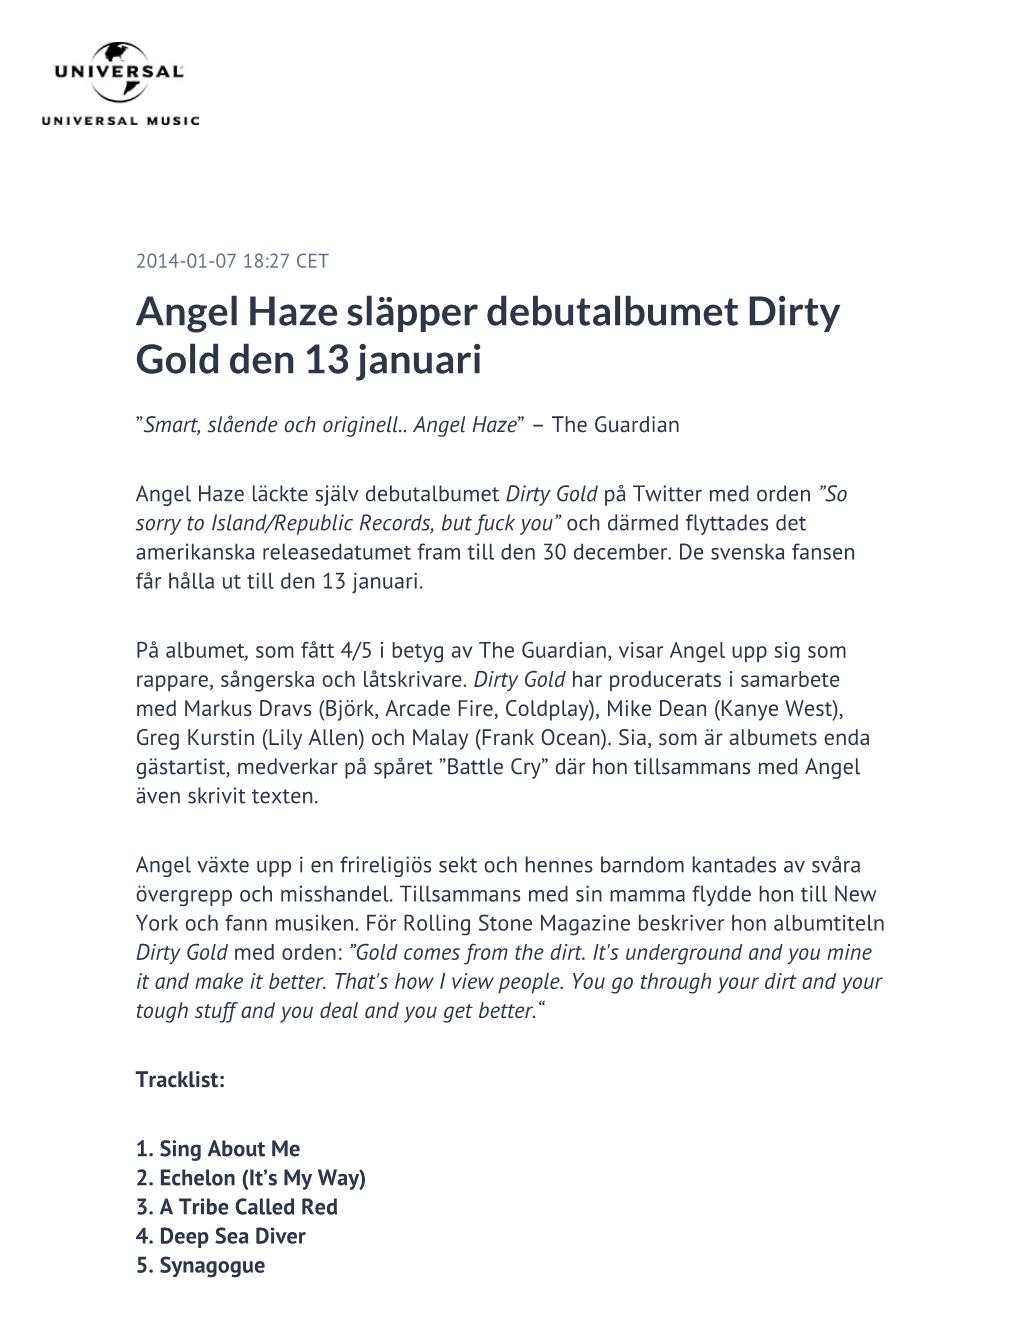 Angel Haze Släpper Debutalbumet Dirty Gold Den 13 Januari